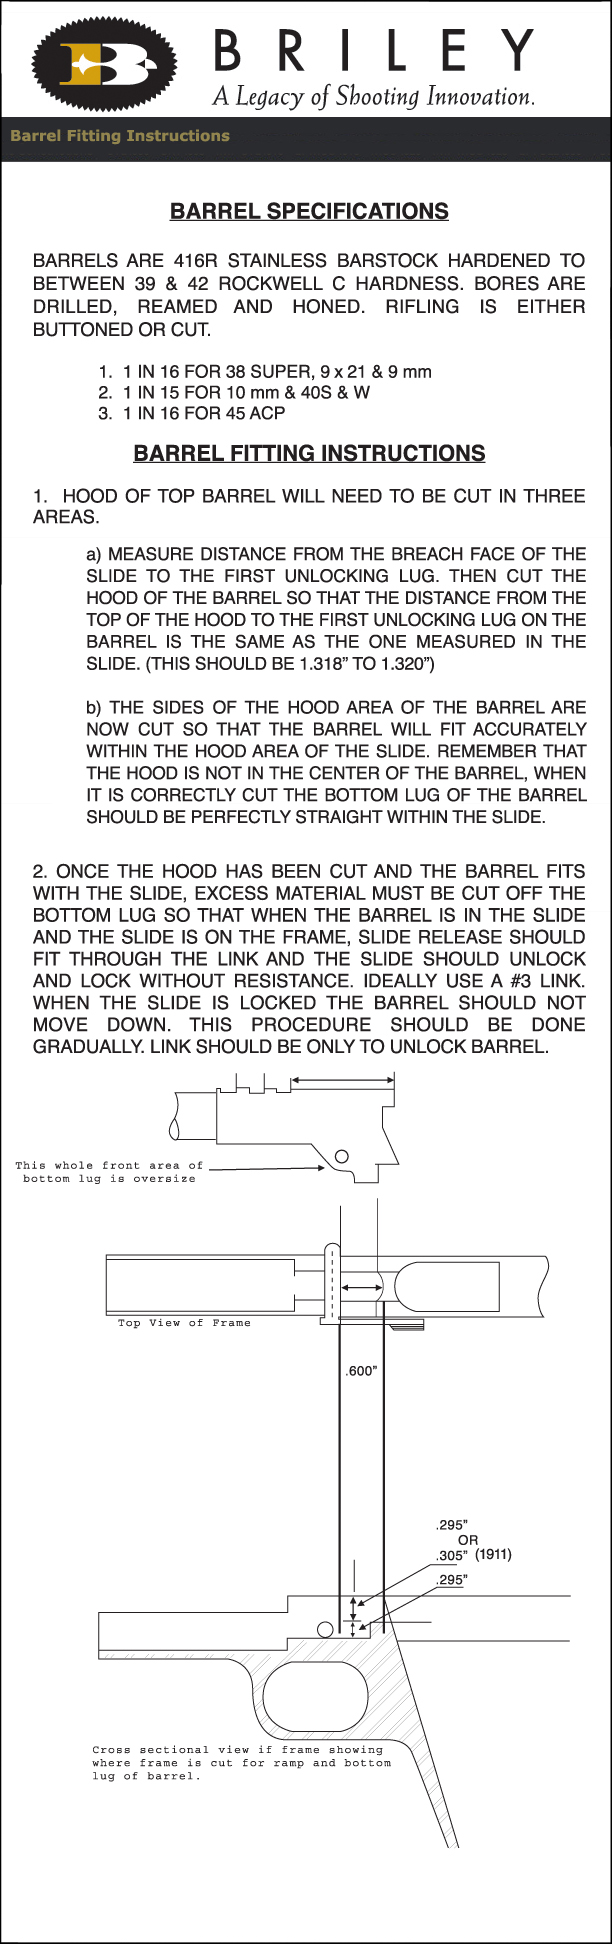 barrel-fitting-instructions-text.jpg